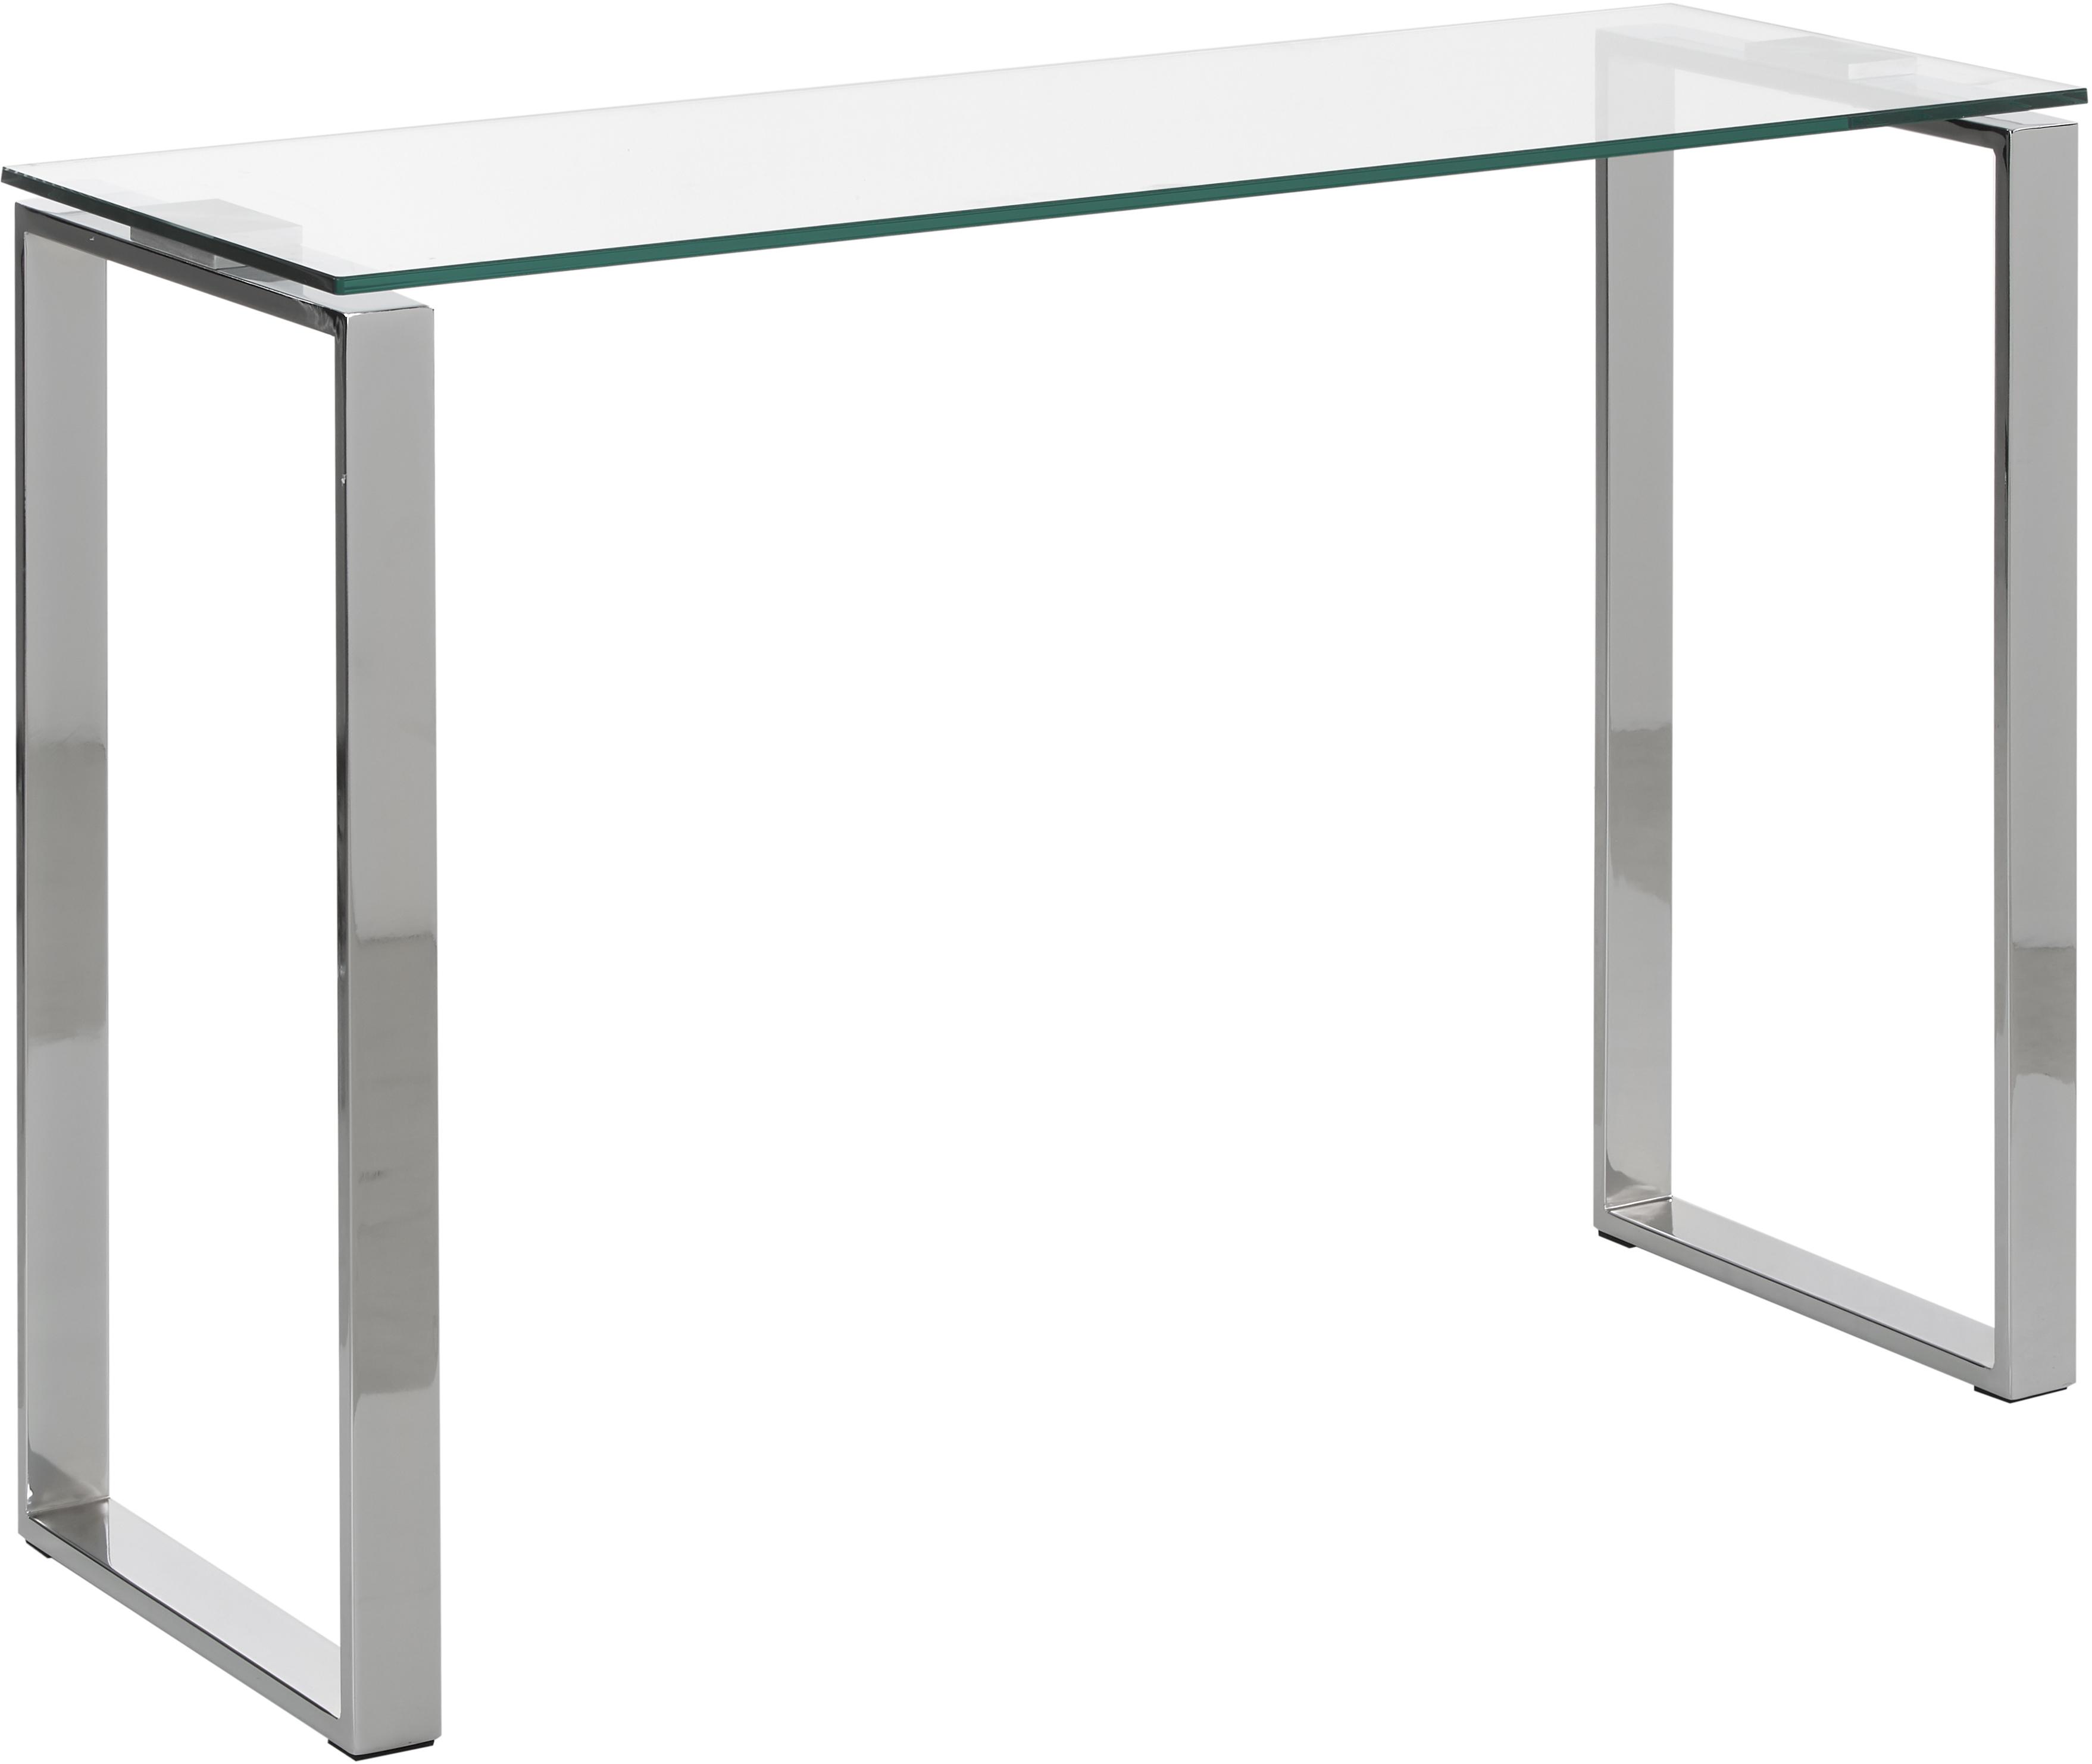 Glazen sidetable frame | WestwingNow